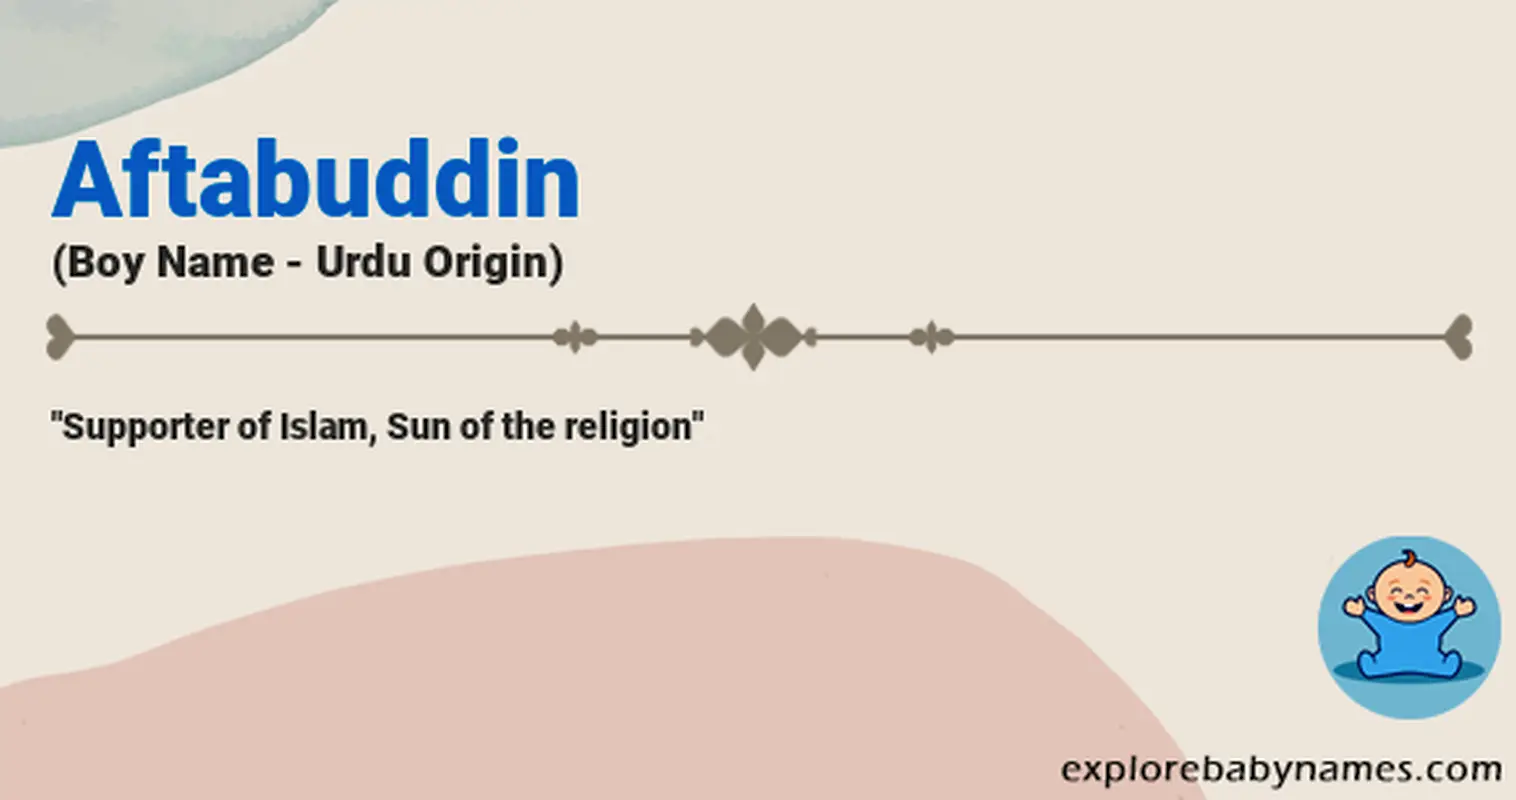 Meaning of Aftabuddin